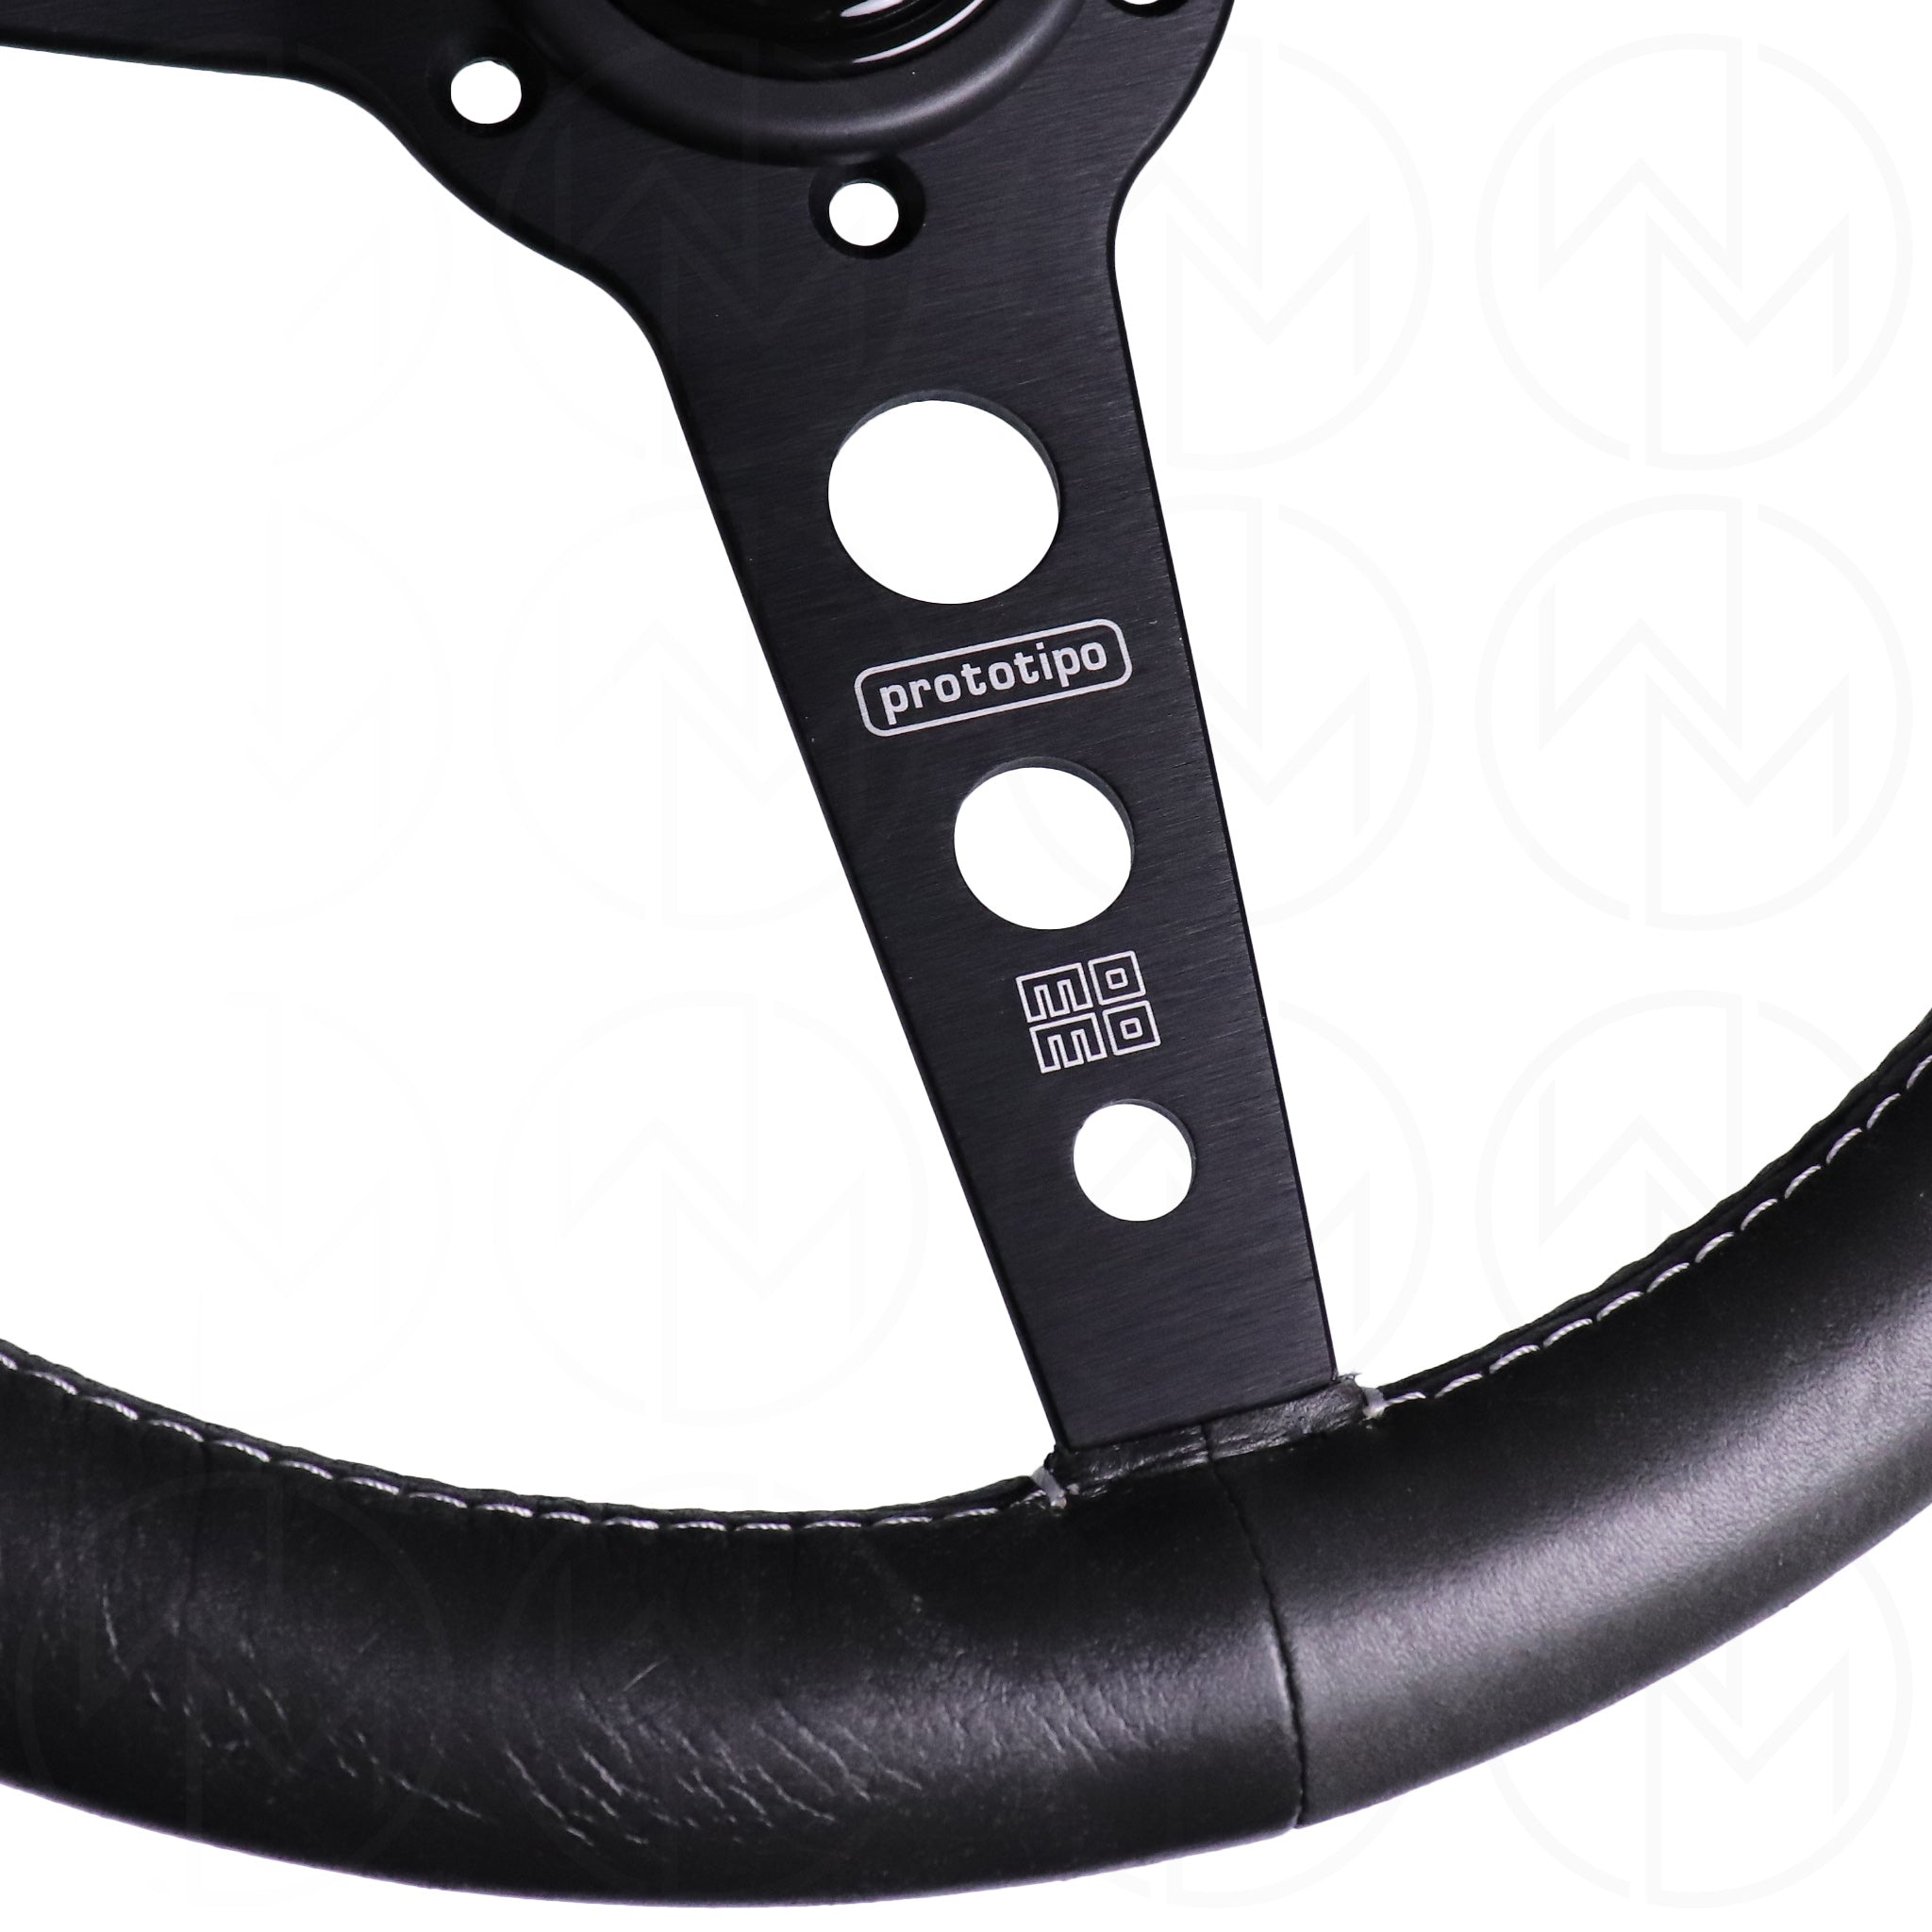 Momo Prototipo Heritage Line Steering Wheel - 350mm Leather w/Black Spokes